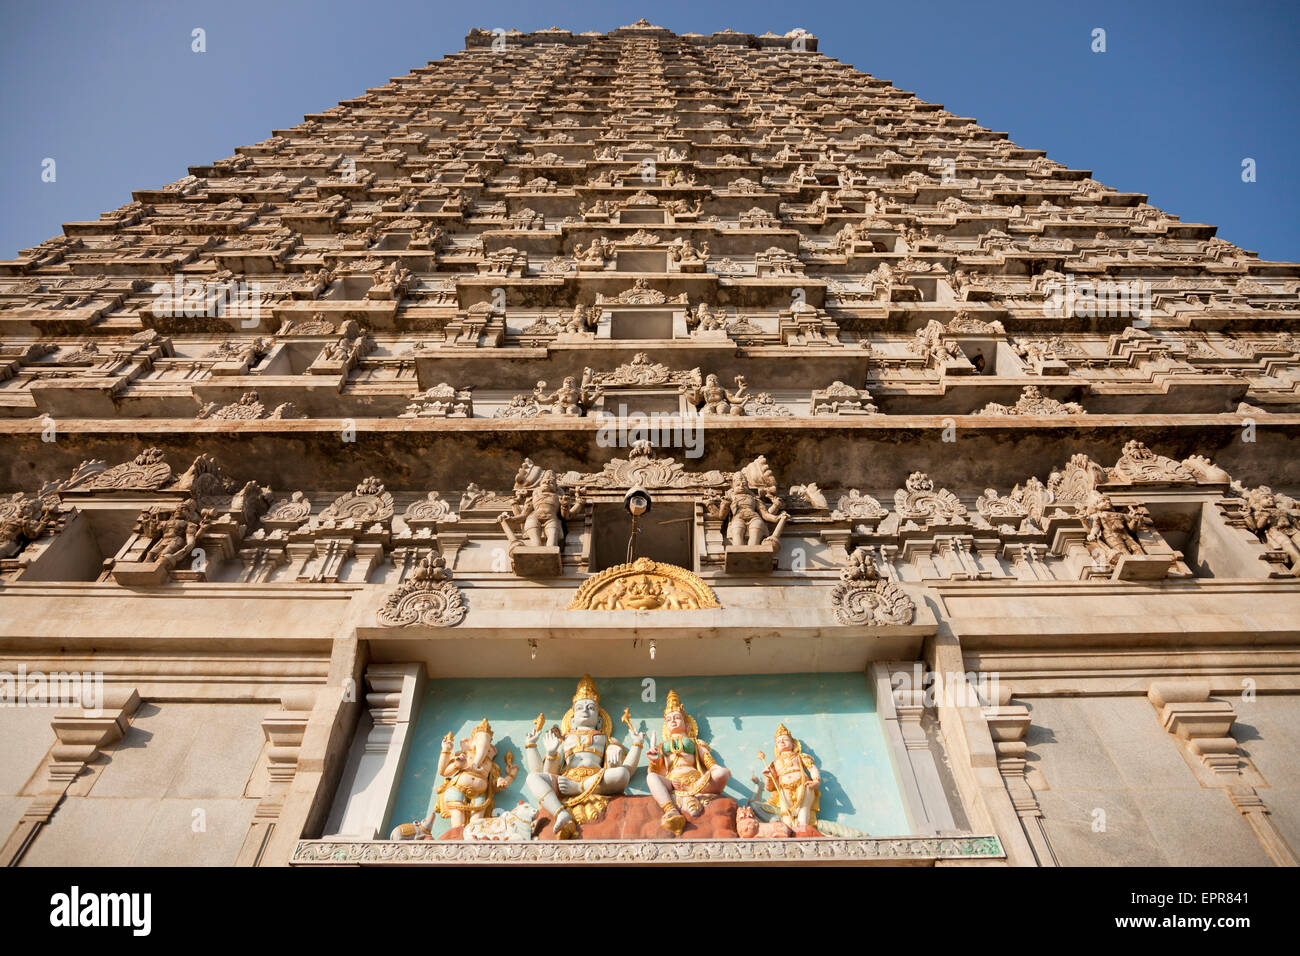 Le géant de gopura Murudeshwar Murudeshwar, temple, Karnataka, Inde, Asie Banque D'Images